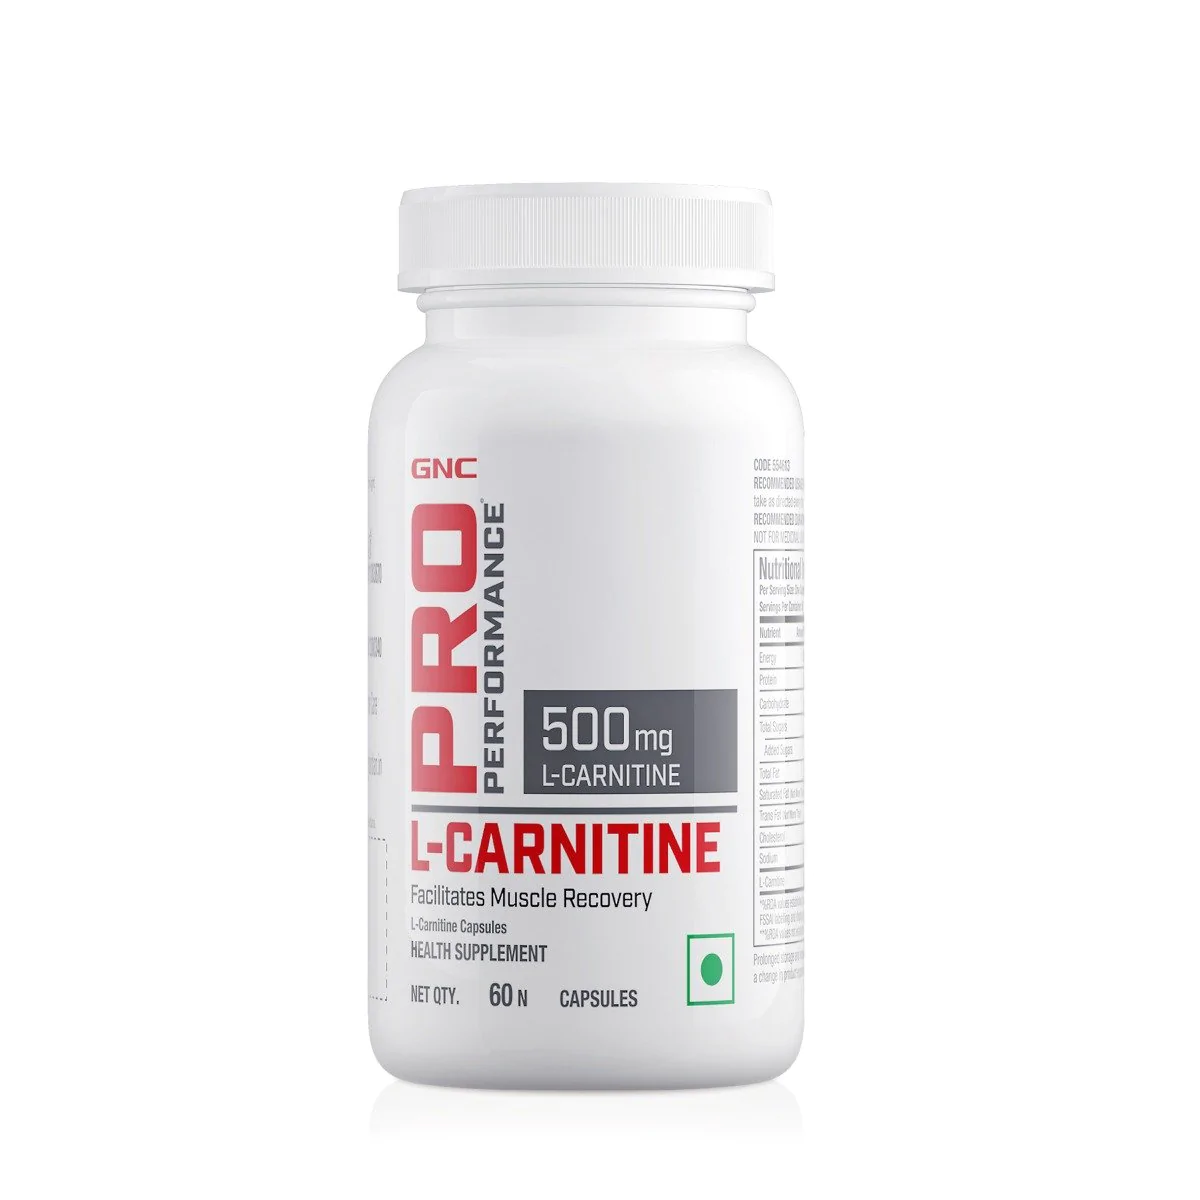 GNC Pro Performance L-Carnitine 500 mg - 60 Capsules